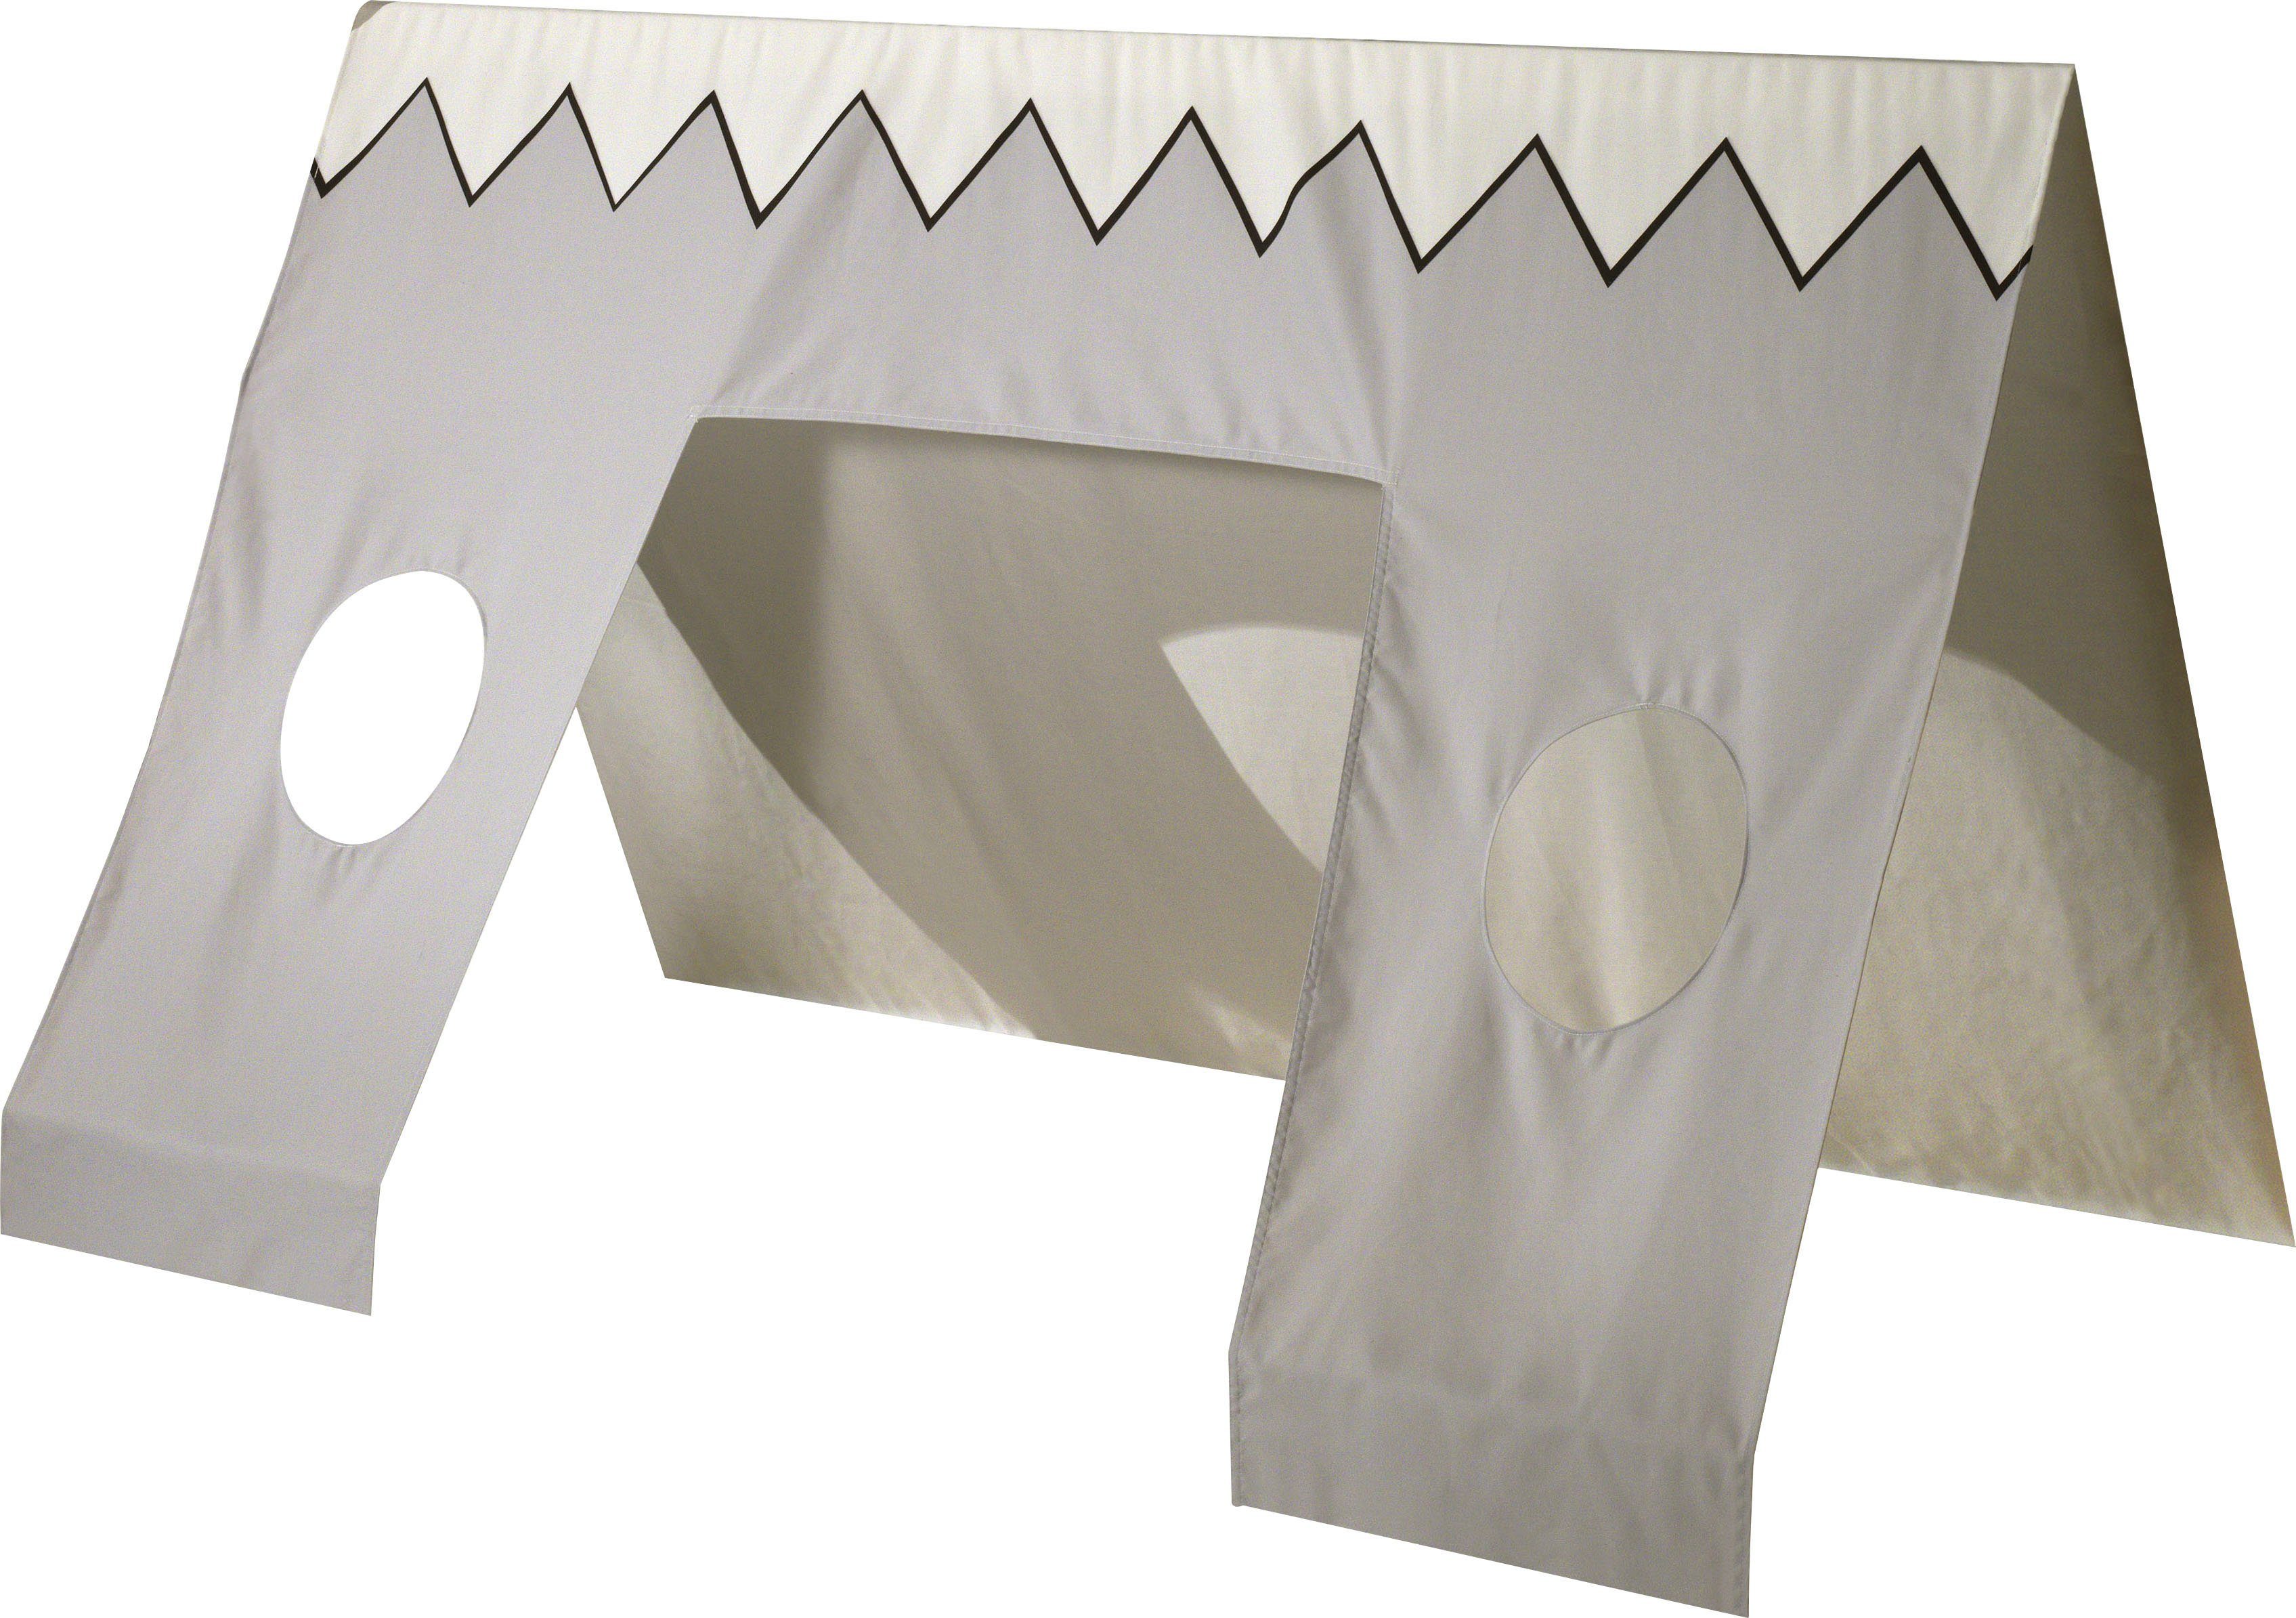 Vipack Kinderbett Tipi, mit Zeltdach Rolllattenrost und